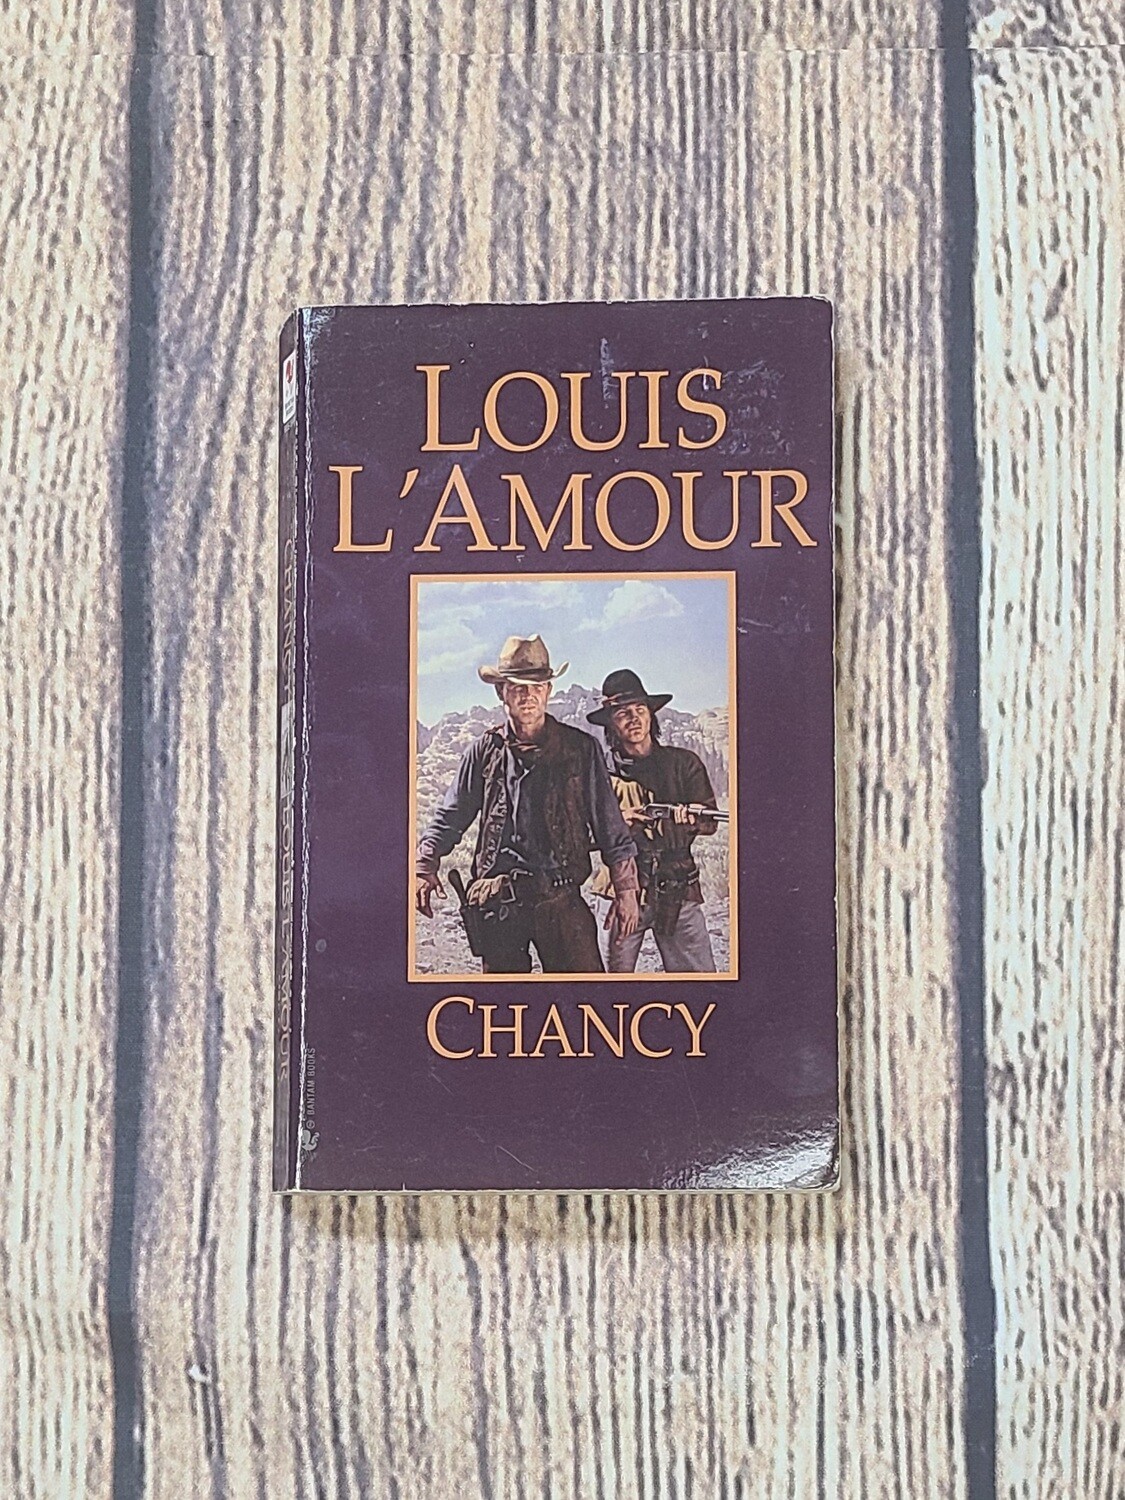 Chancy by Louis L'Amour